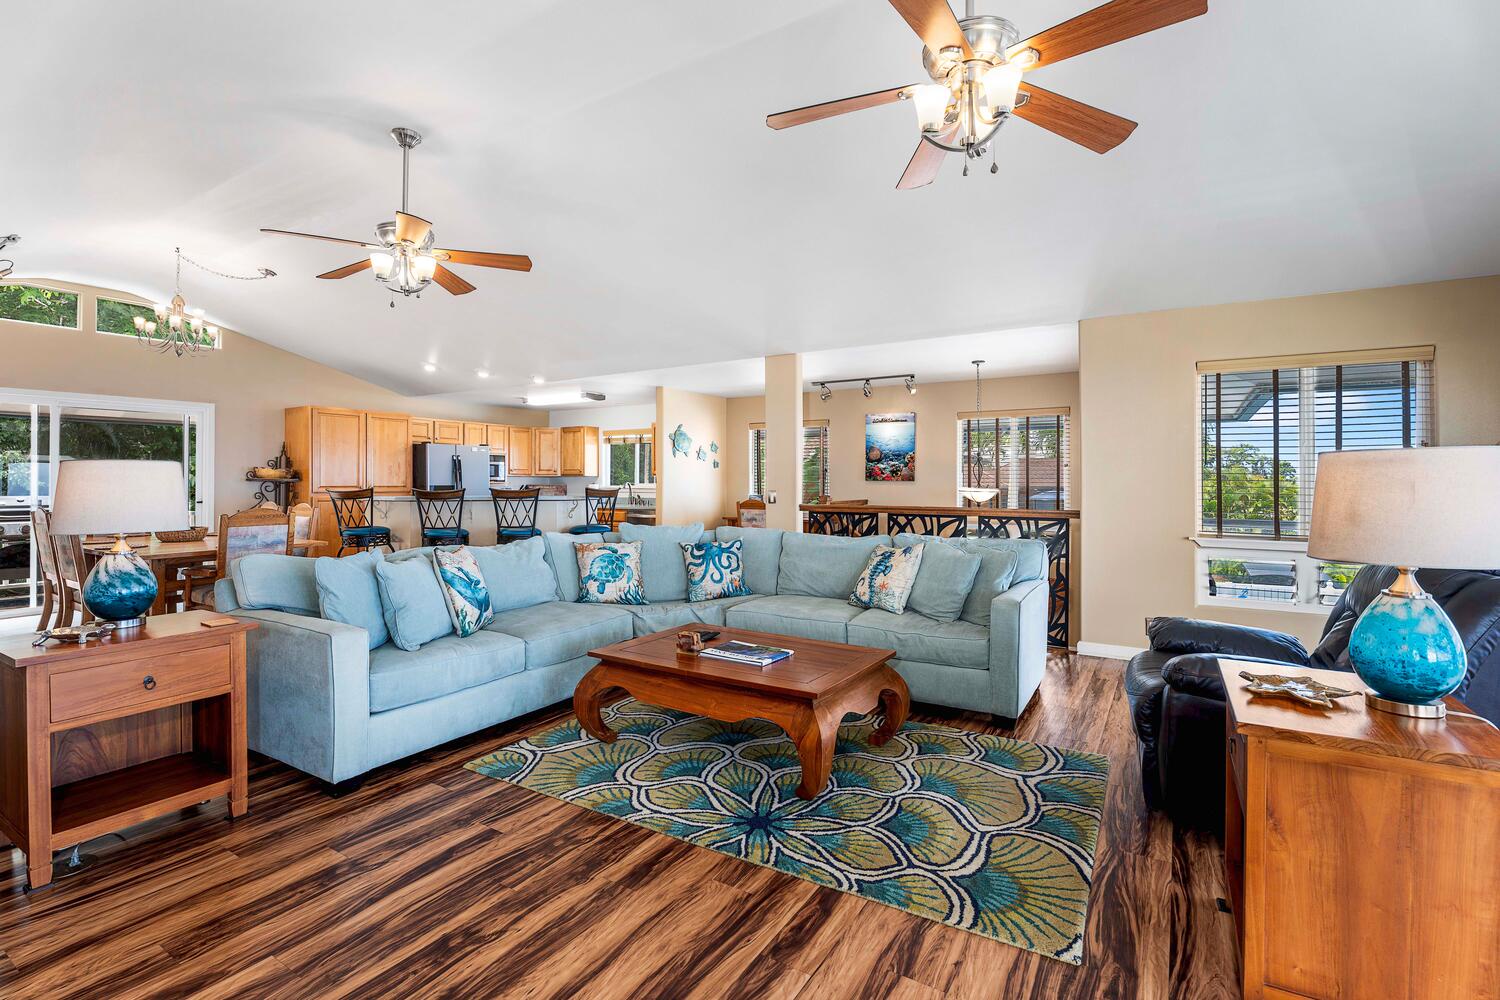 Kailua Kona Vacation Rentals, Honu O Kai (Turtle of the Sea) - The living area has plush sectional sofas, ceiling fan and TV.